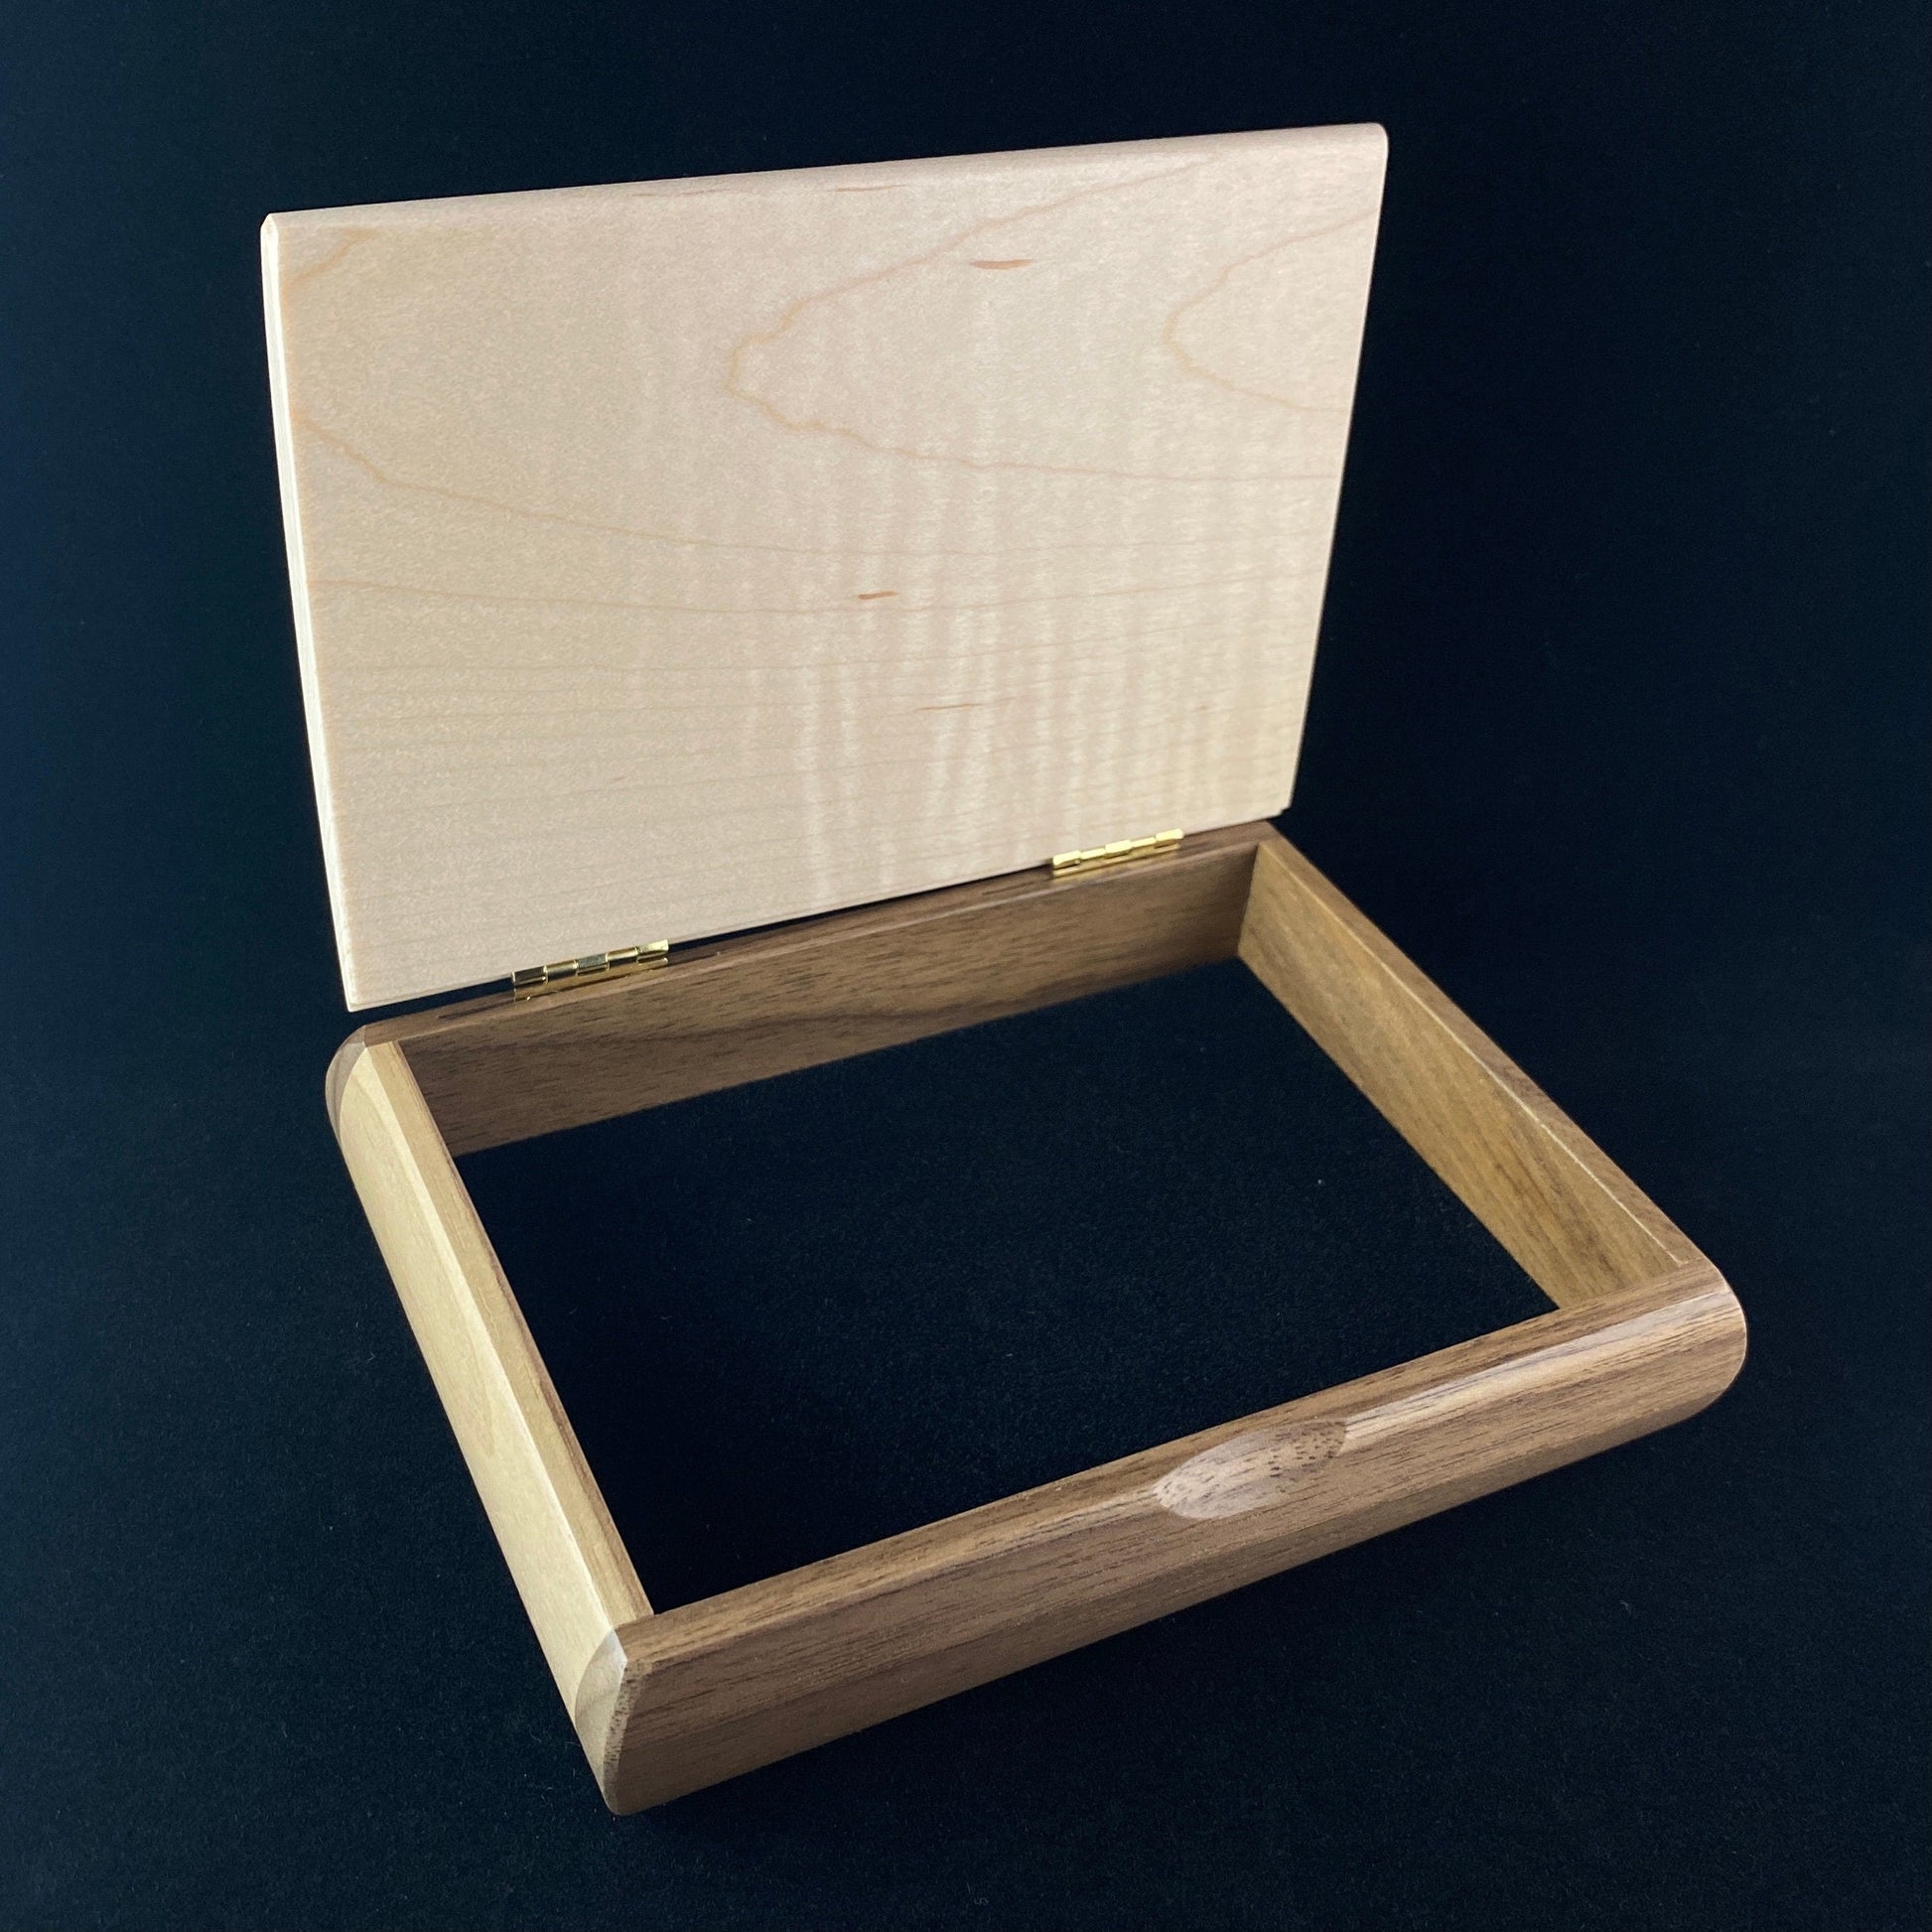 Handmade Wooden Jewelry Box - Curly Maple and Walnut